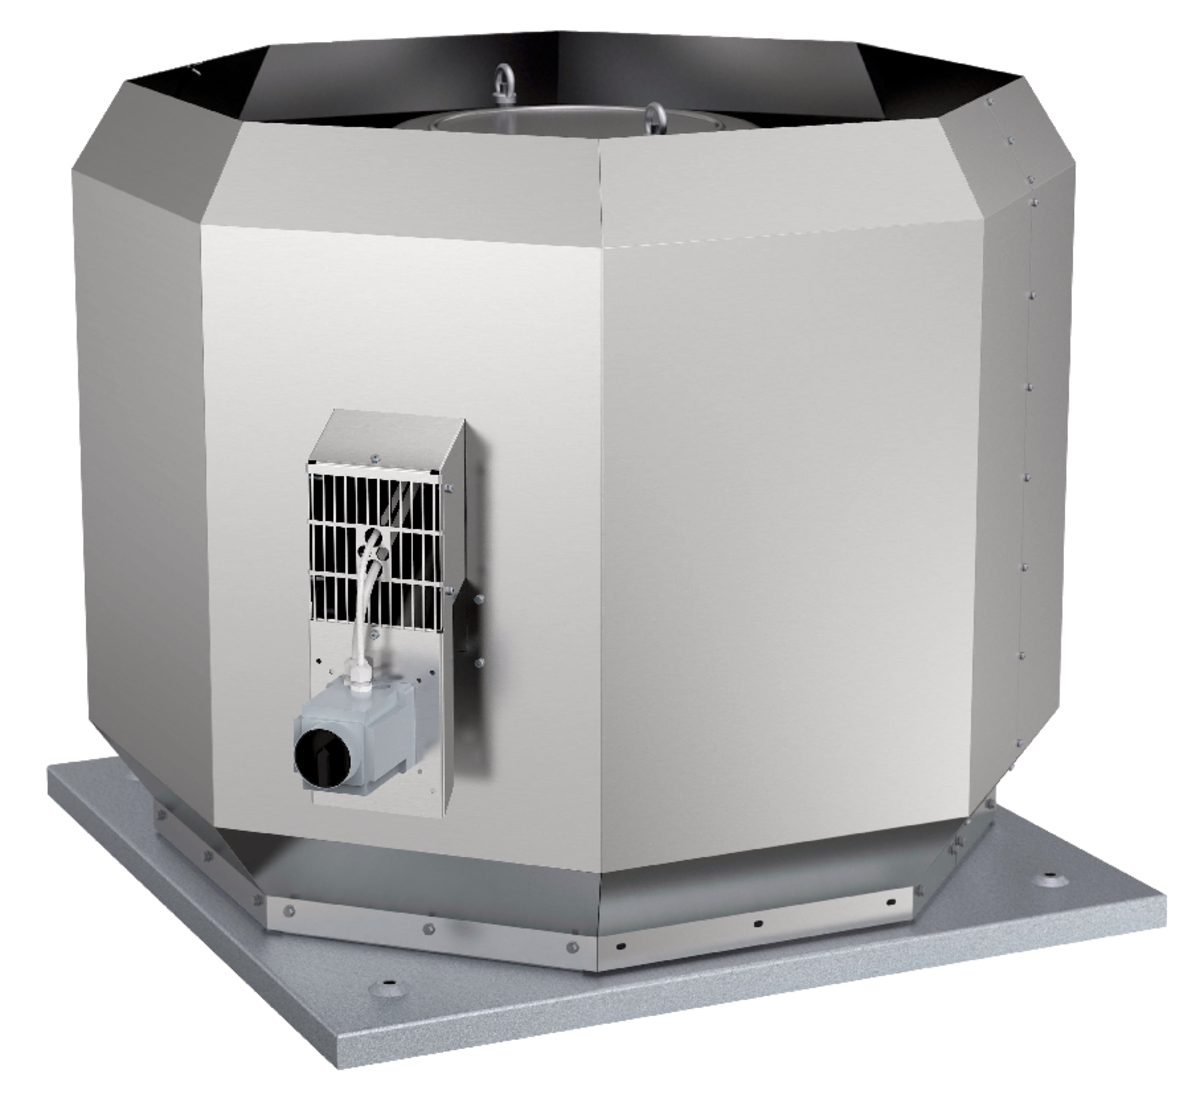 DVV - Dak ventilatoren - Ventilatoren & Accessoires - Producten - Systemair